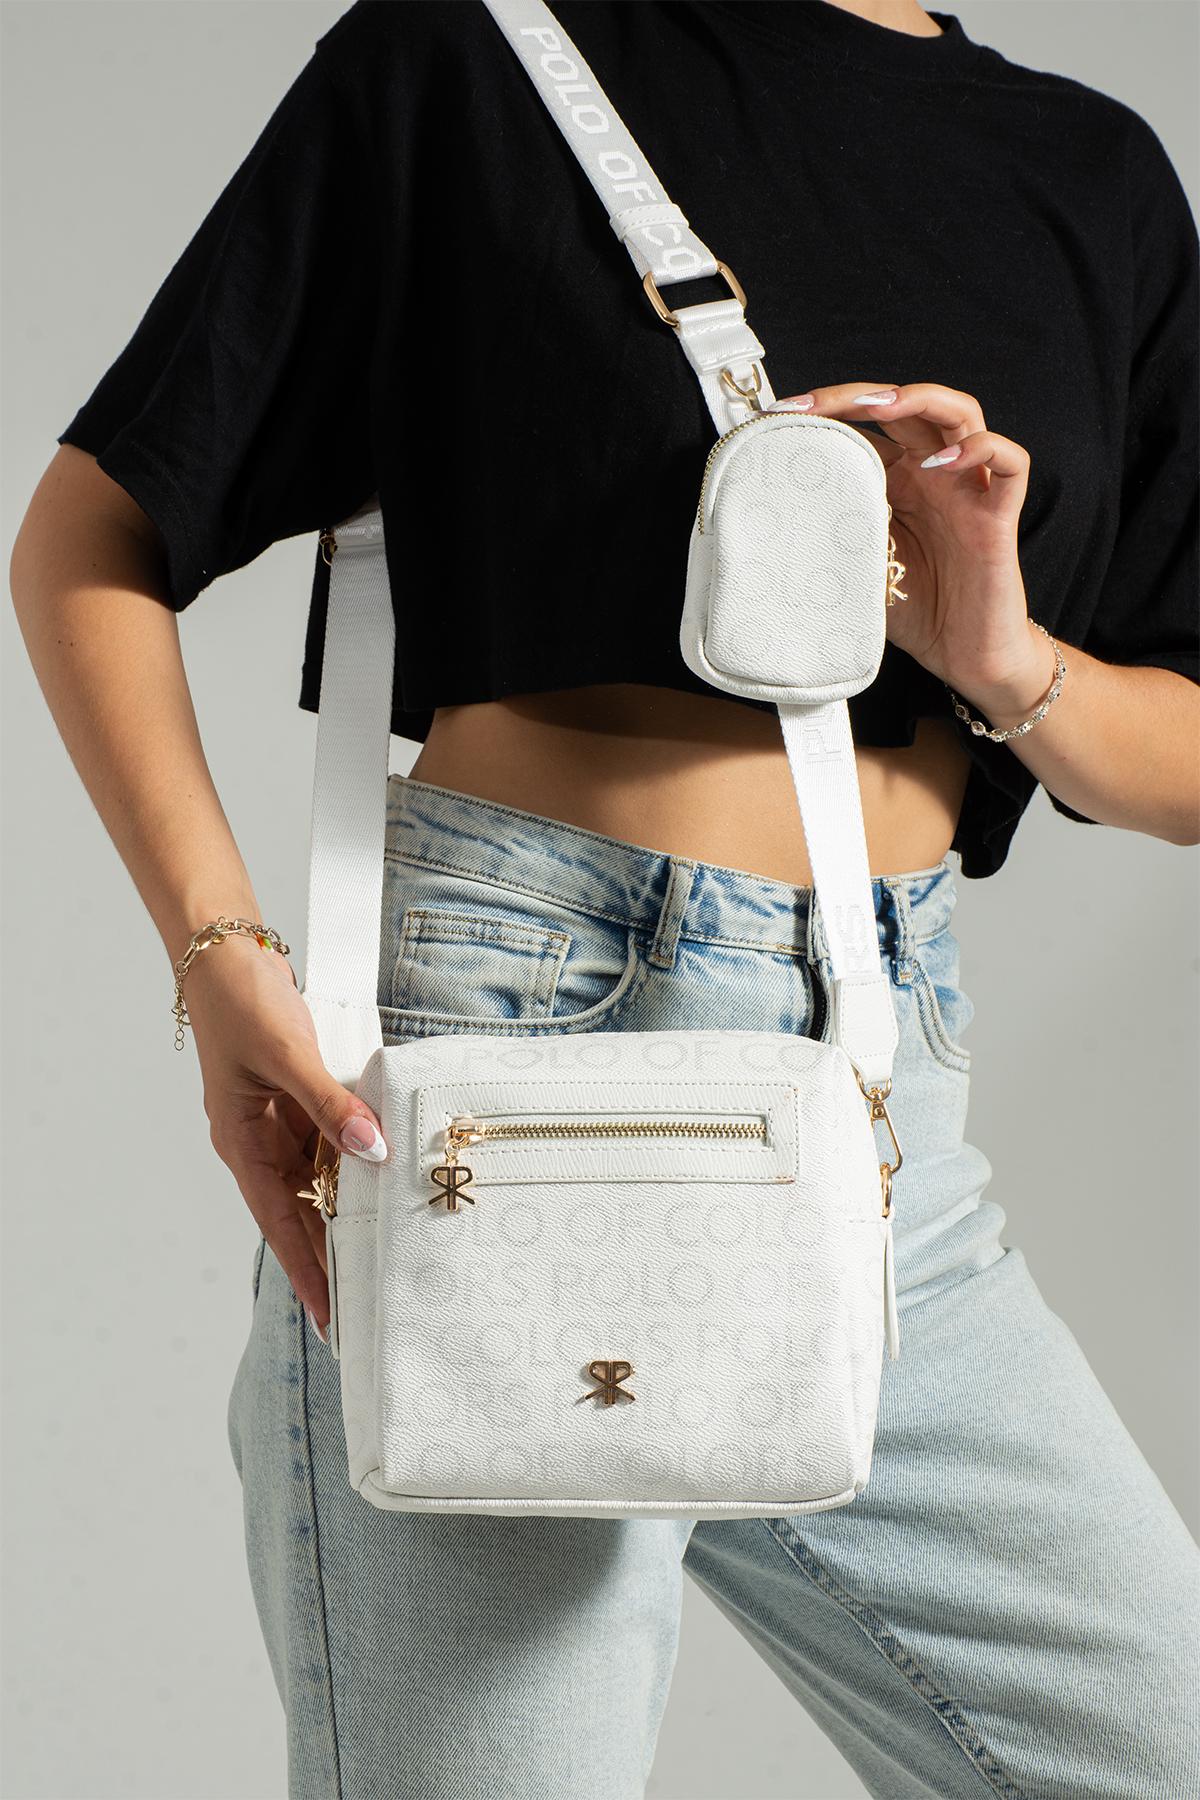 YOGII Fashion Bag Damesschouder- en handtas waterdichte kunstleren portemonnee